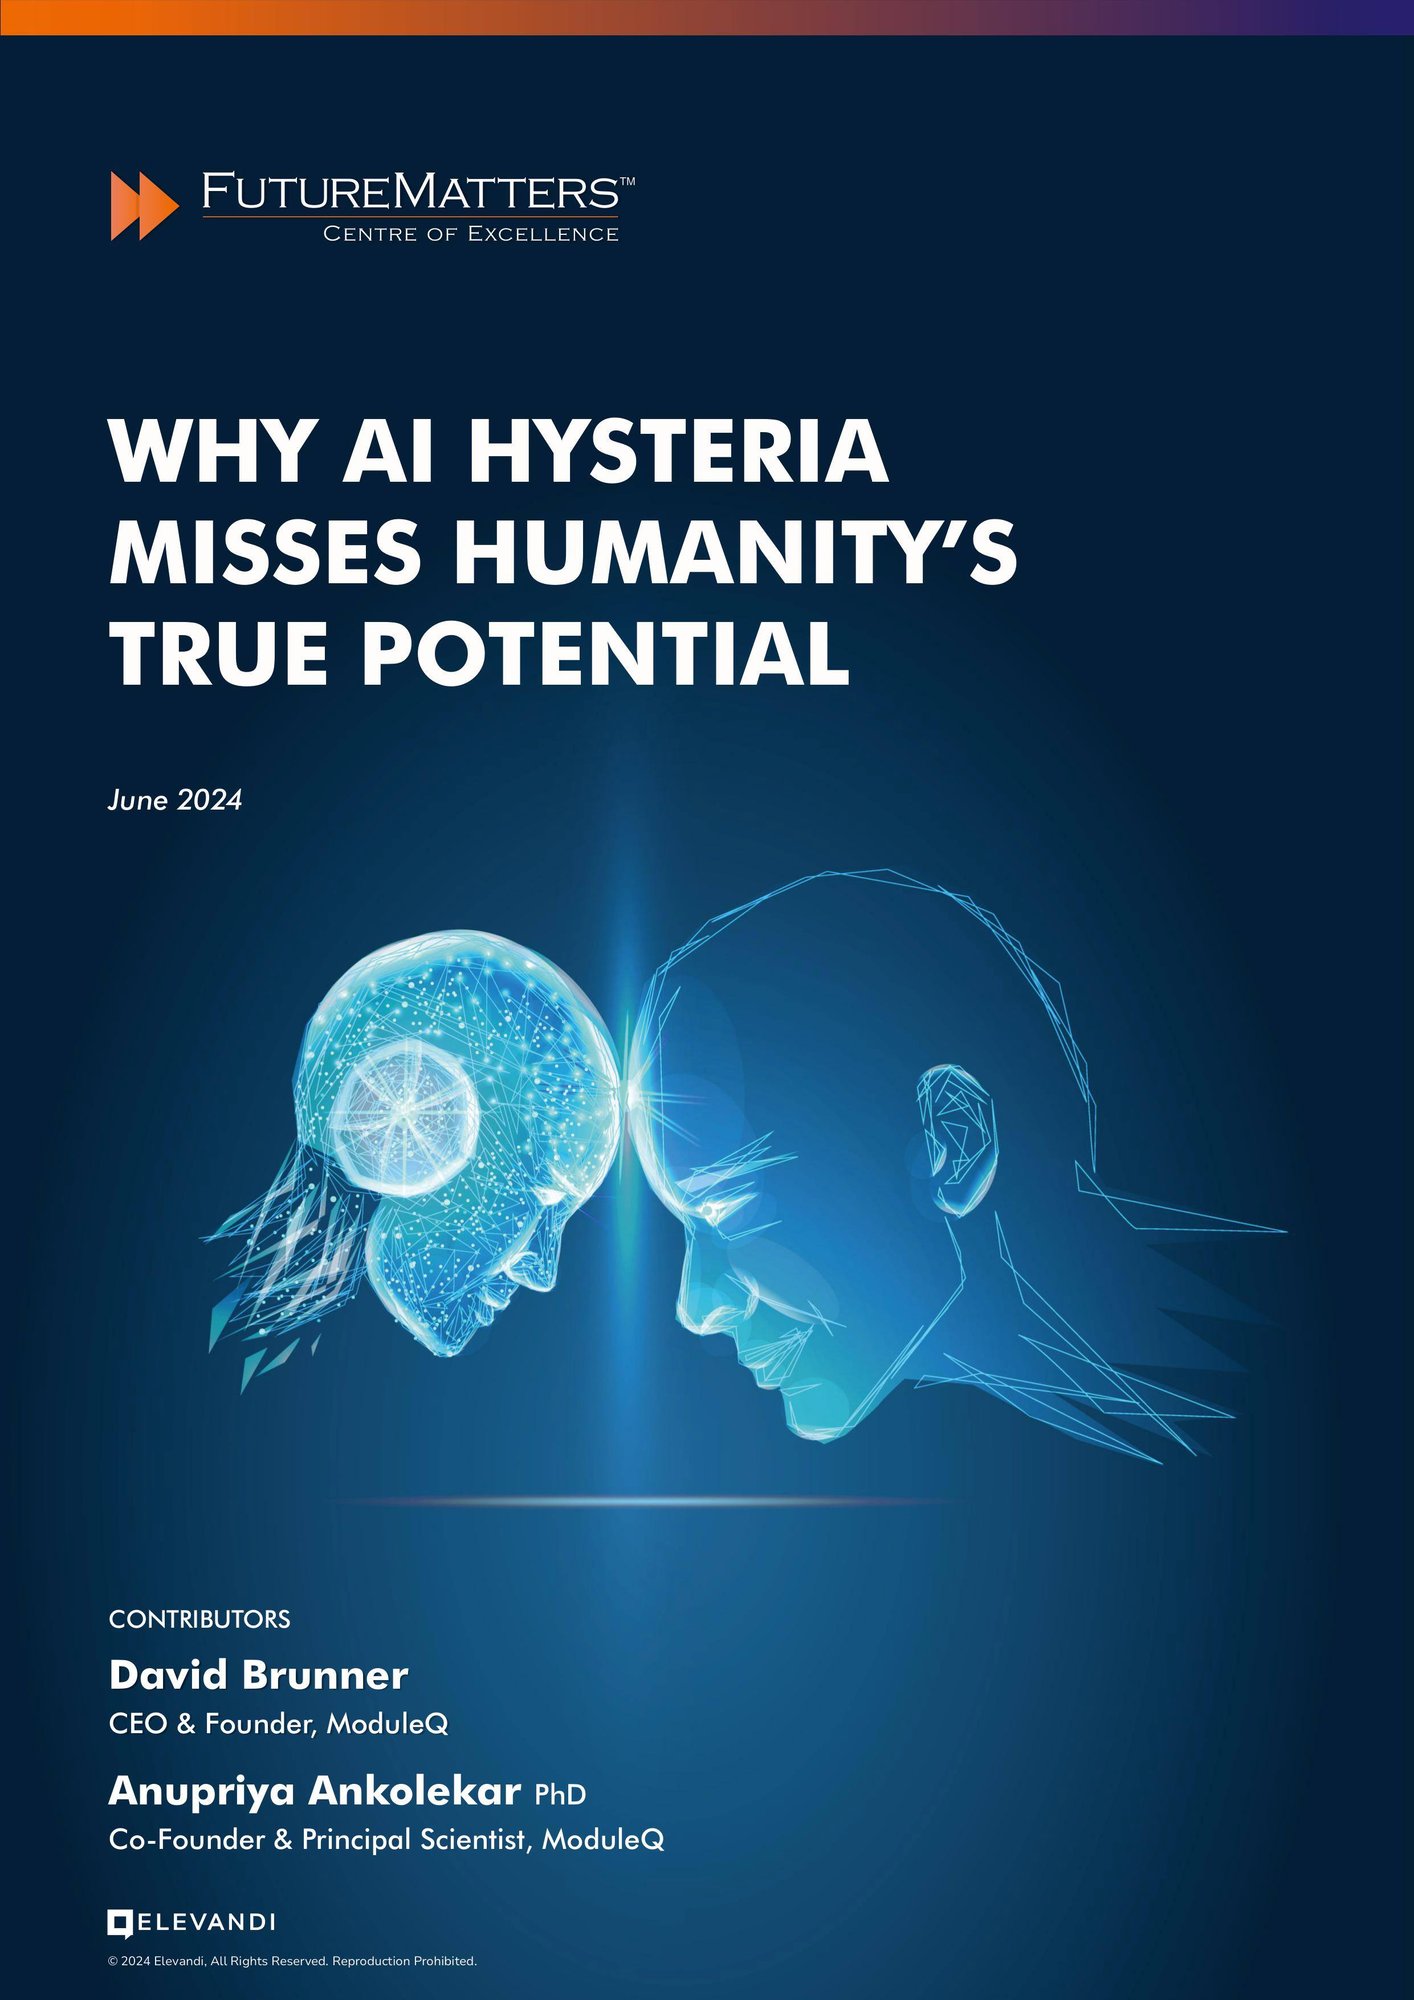 Why AI hysteria misses humanitys true potential - David Brunner - Anupriya Ankolekar - June 2024-images-0